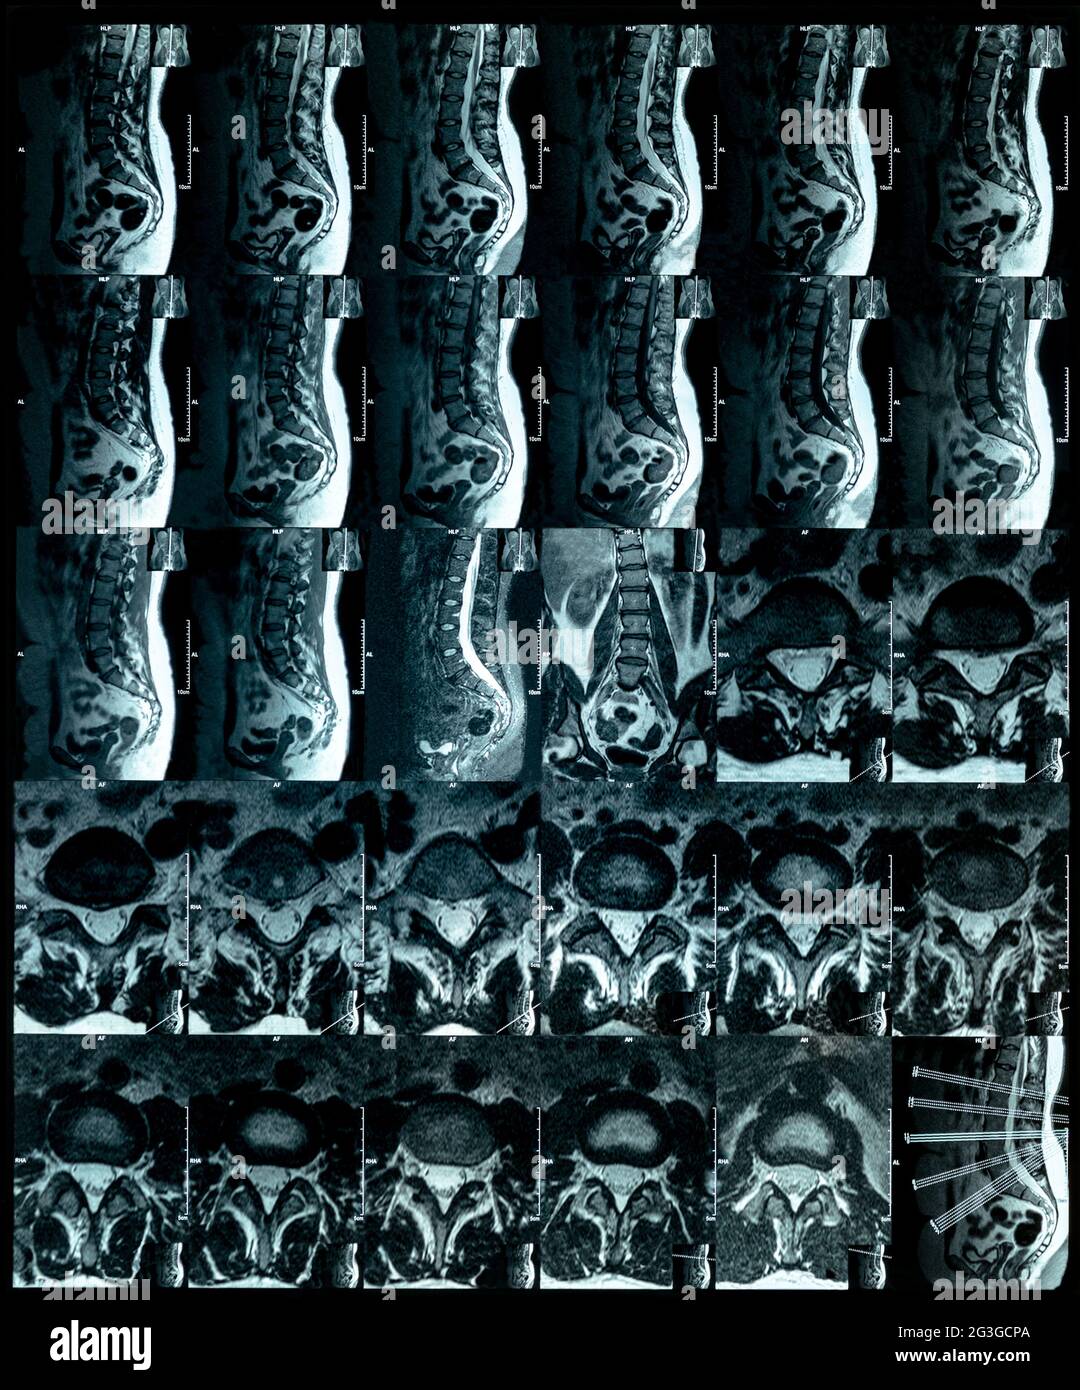 Magnetic resonance imaging spine discs protrusion laboratory film Stock Photo